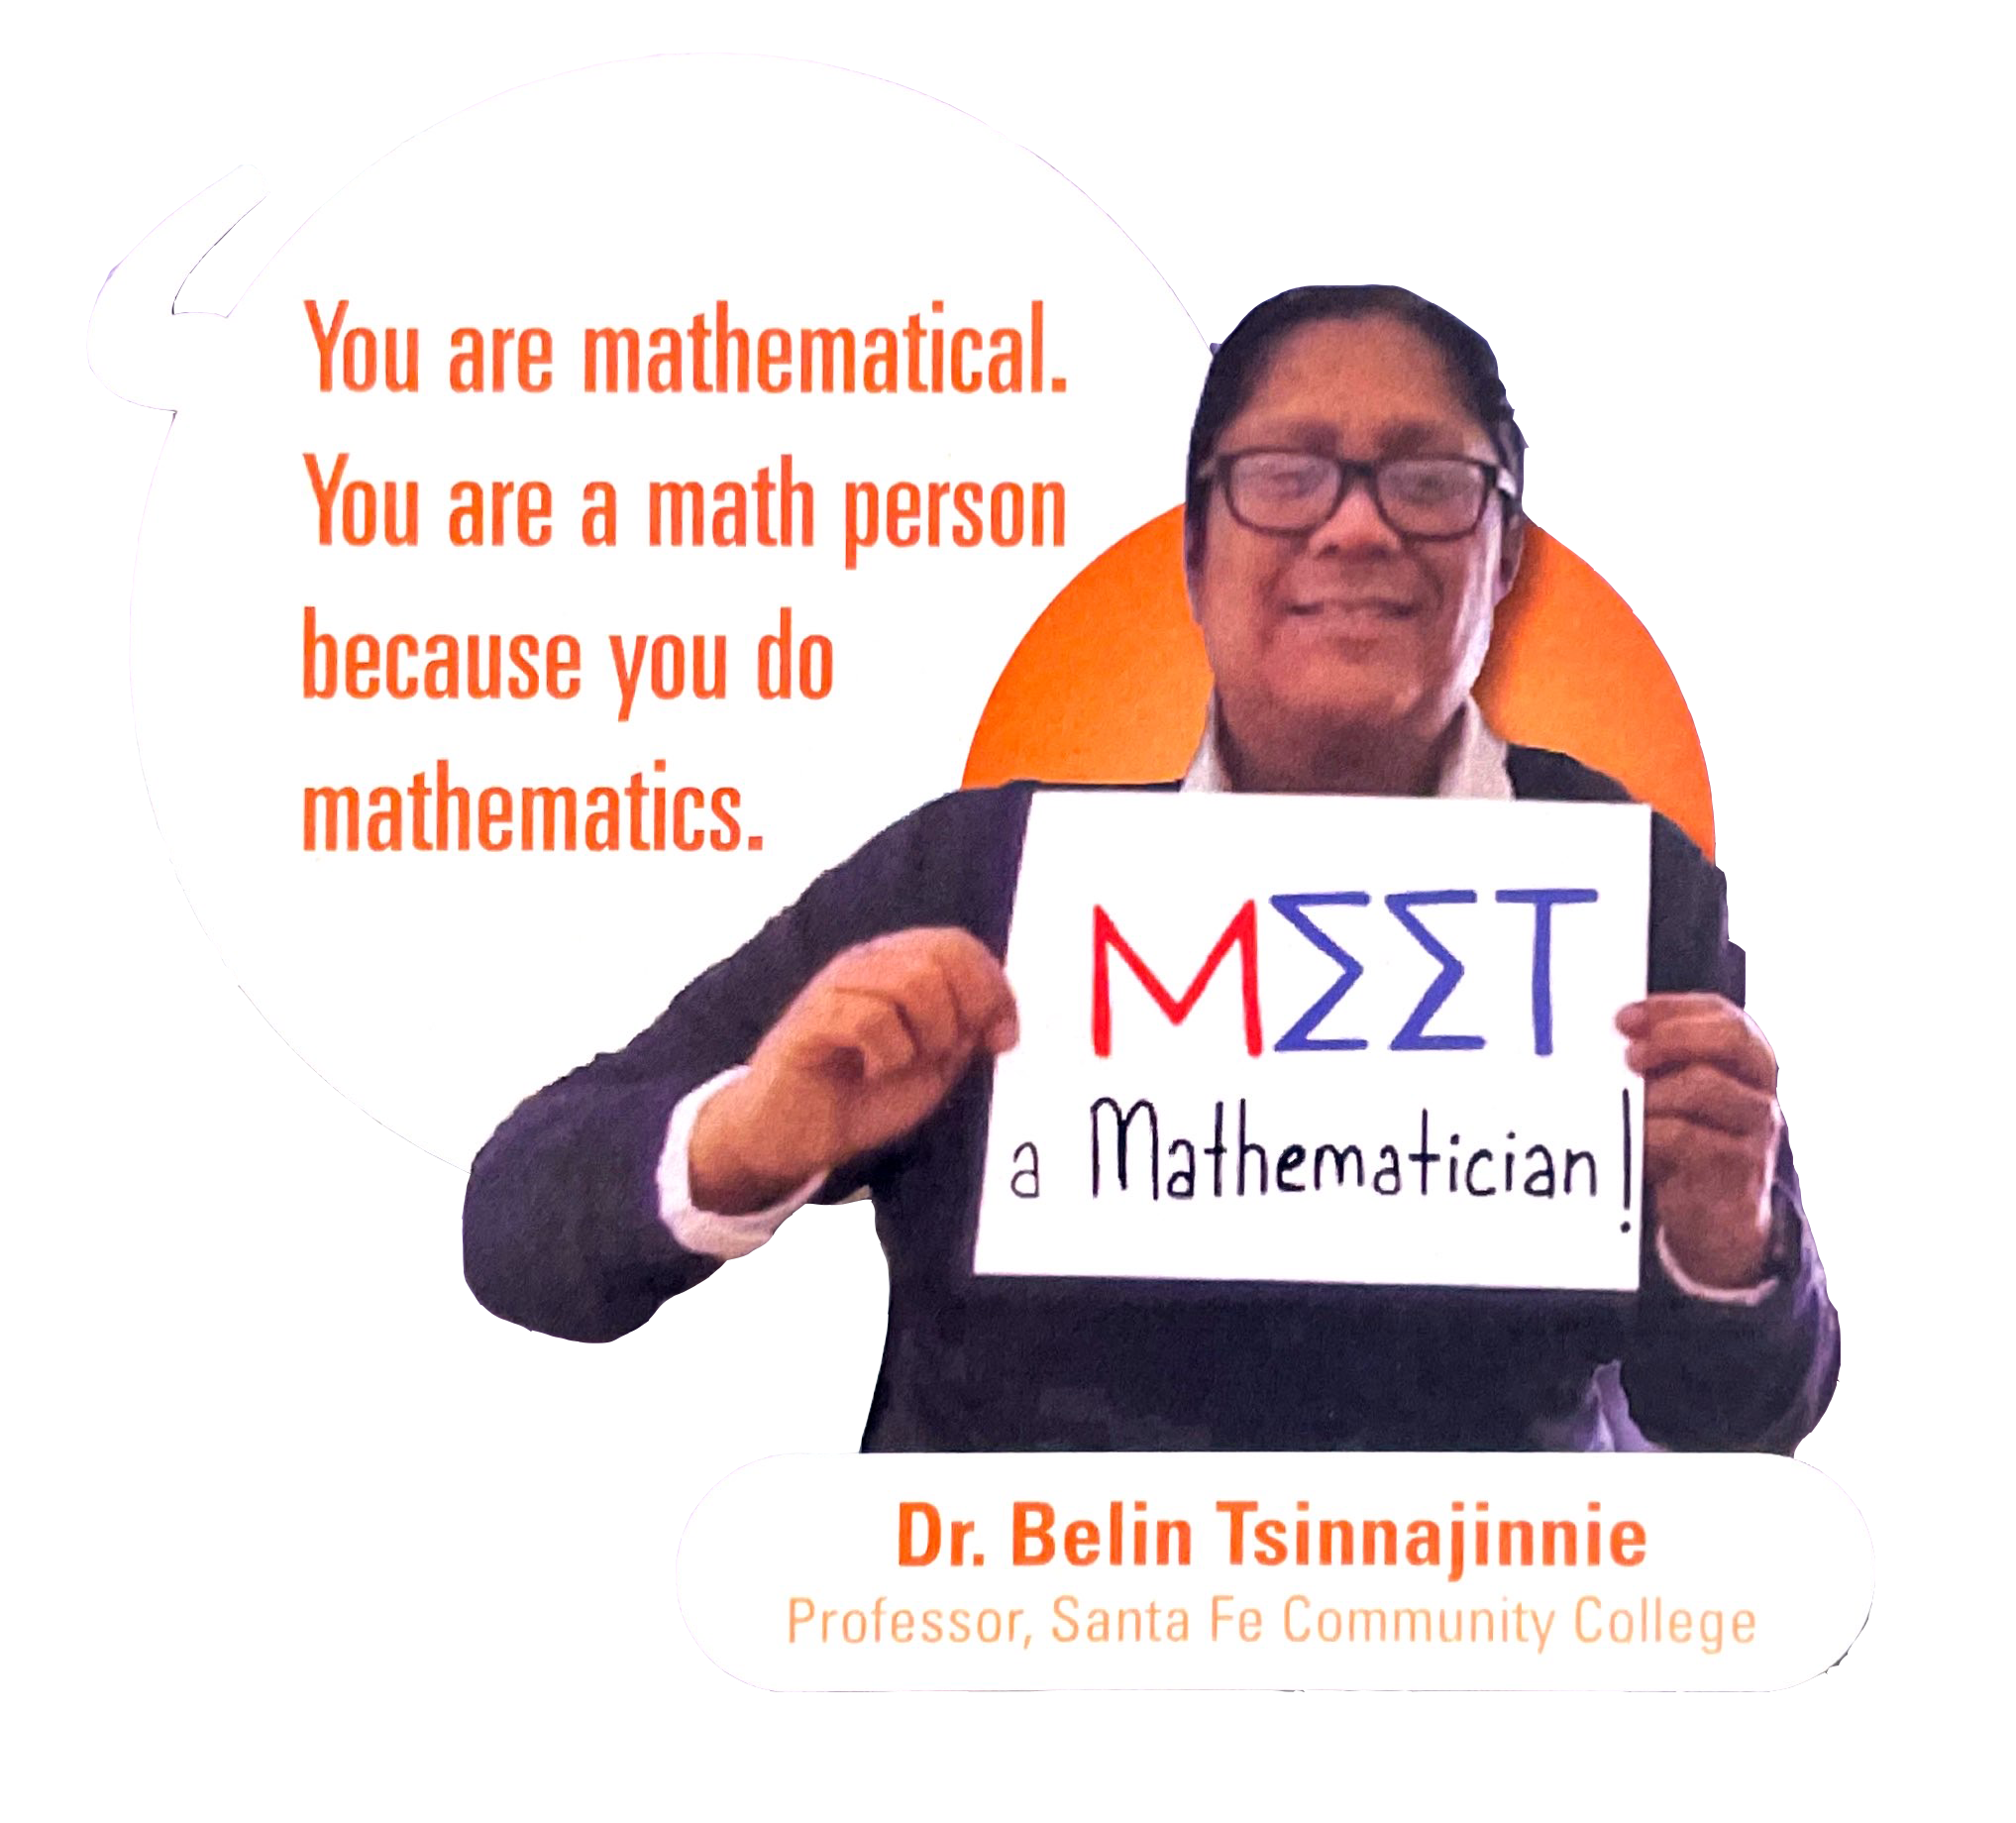 Spotlight: Meet a Mathematician - Dr. Belin Tsinnajinnie, Professor, Santa Fe Community College. "You are mathematical. You are a math person because you do mathematics."